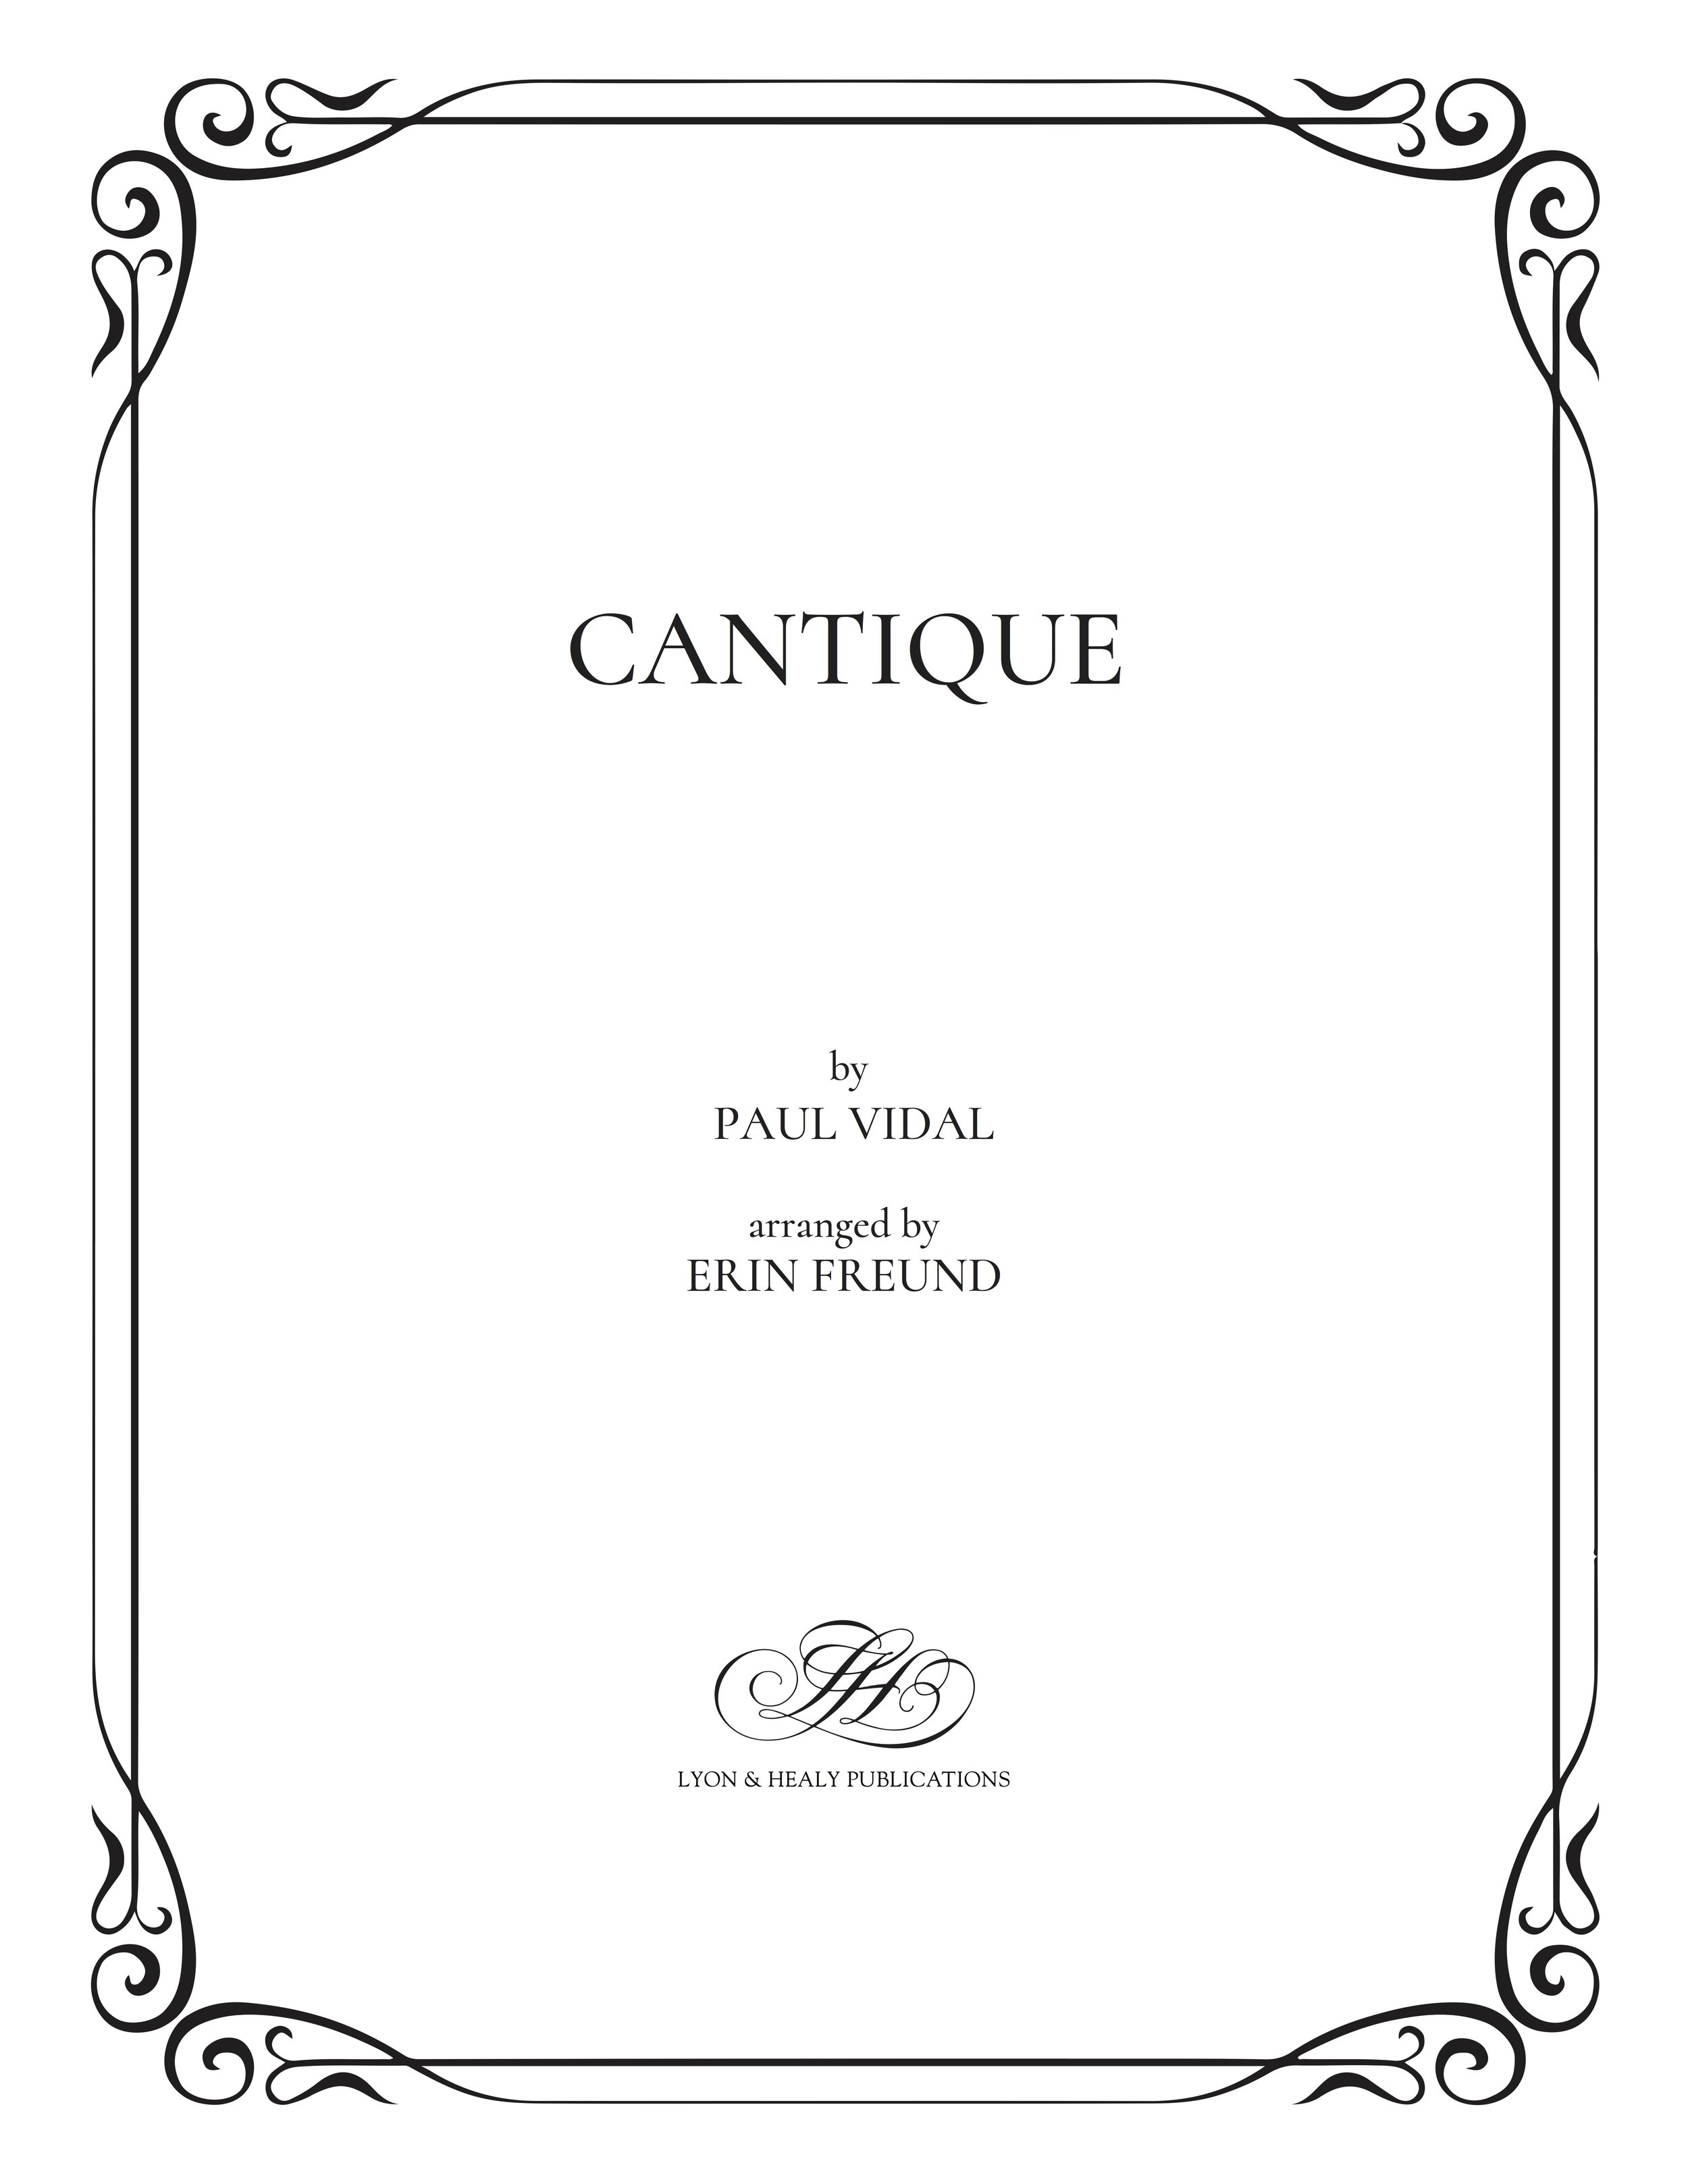 Cantique - Vidal-Freund cover.jpg